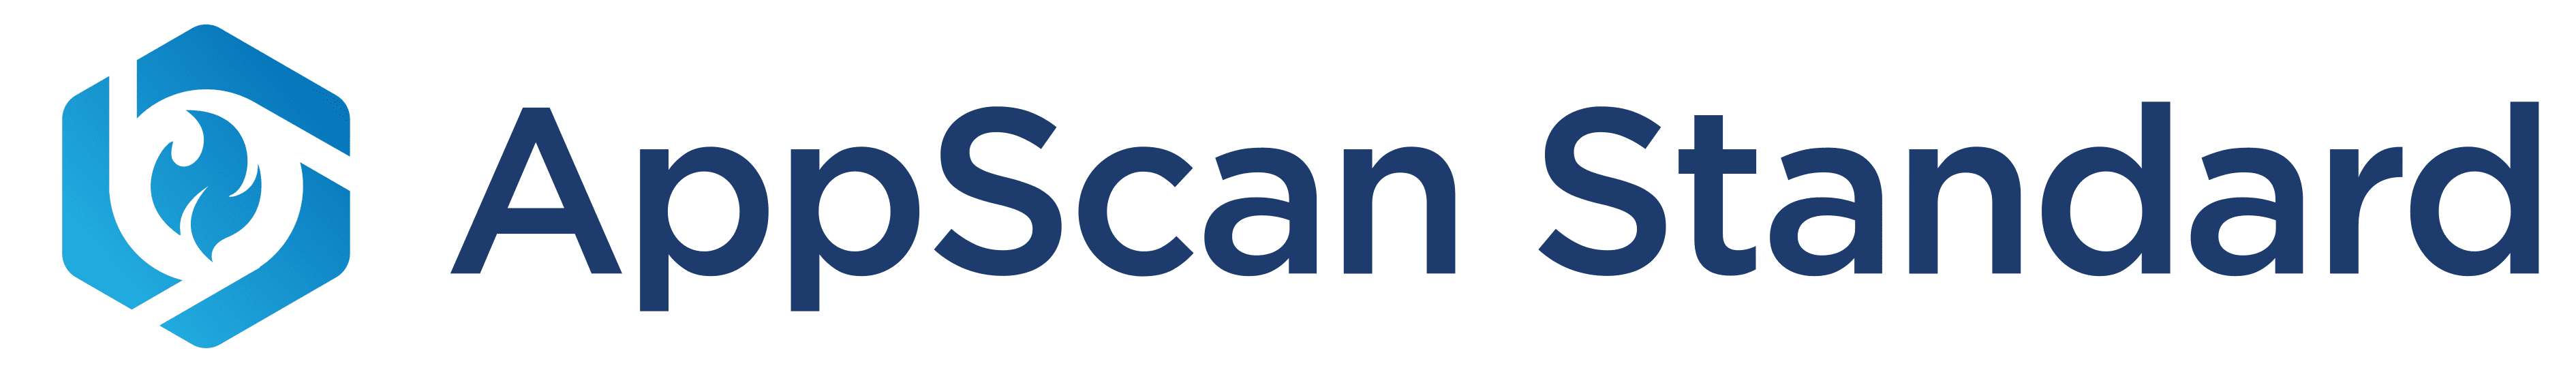 HCL AppScan Standardロゴ